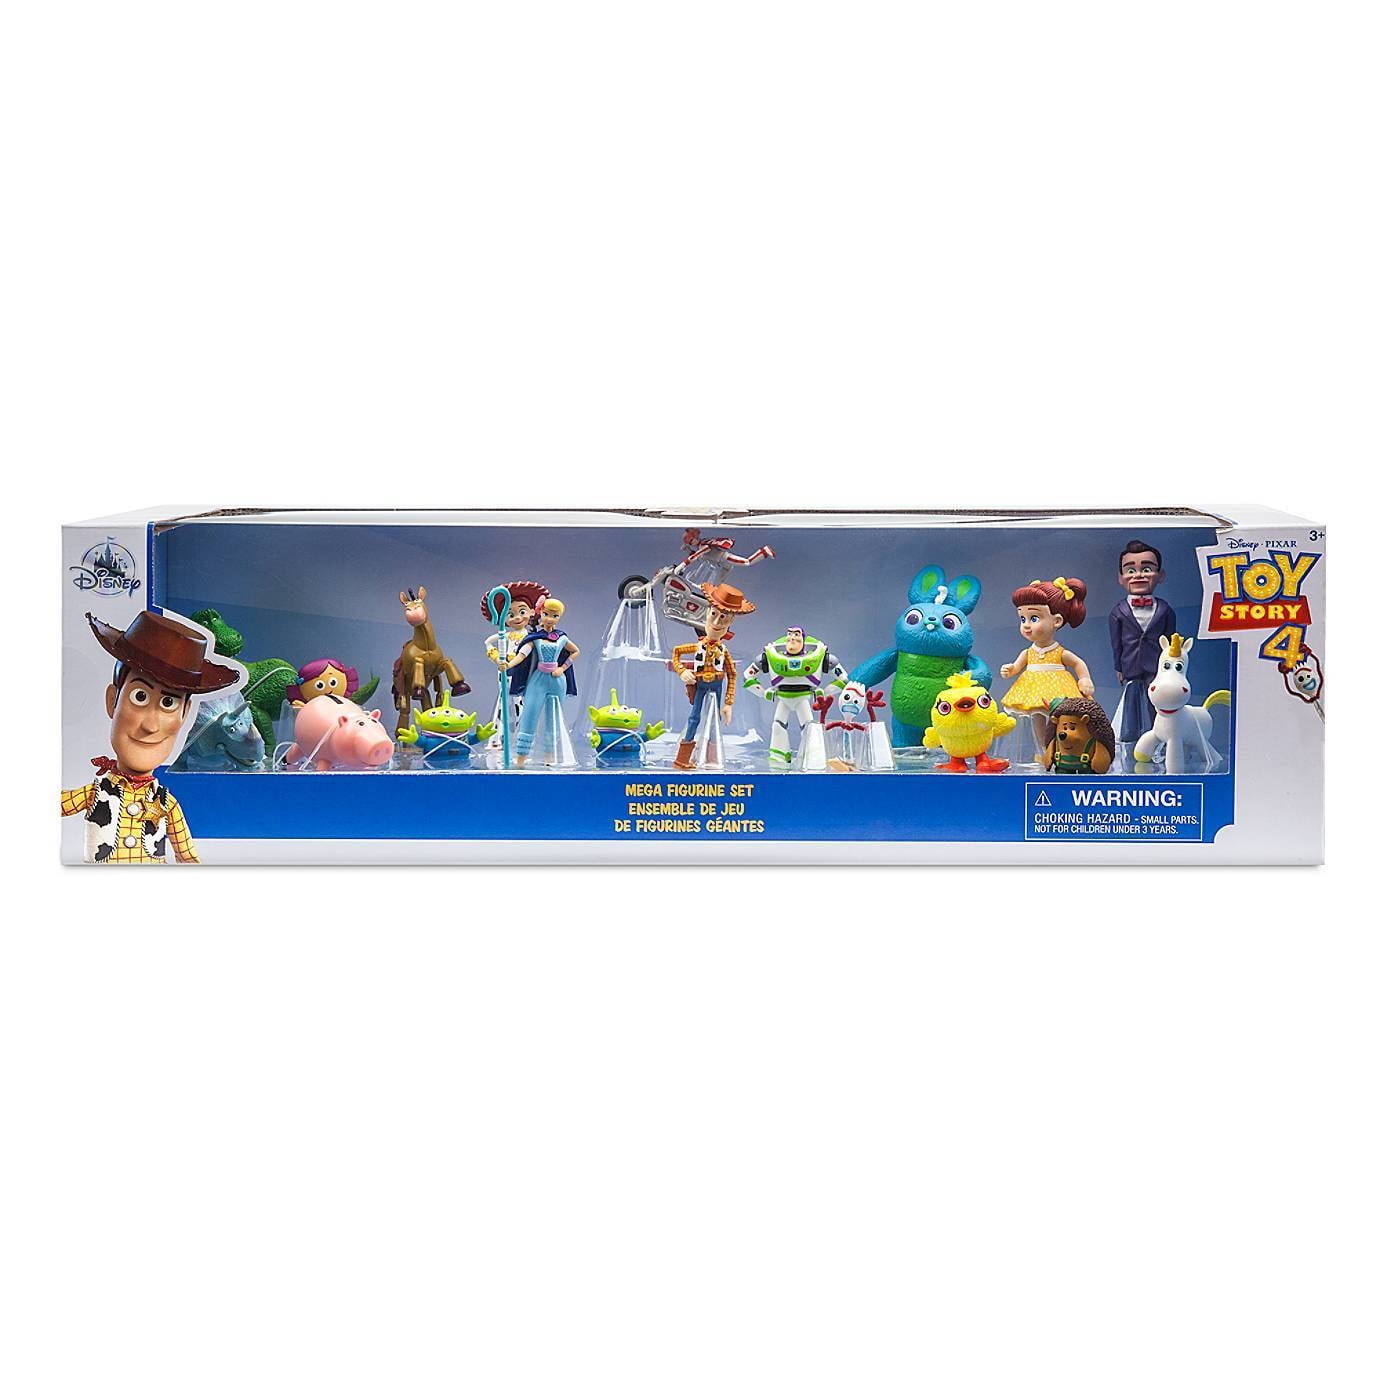 Disney Store Toy Story 4 Mega Figurine Set Cake Topper 19 Pieces New